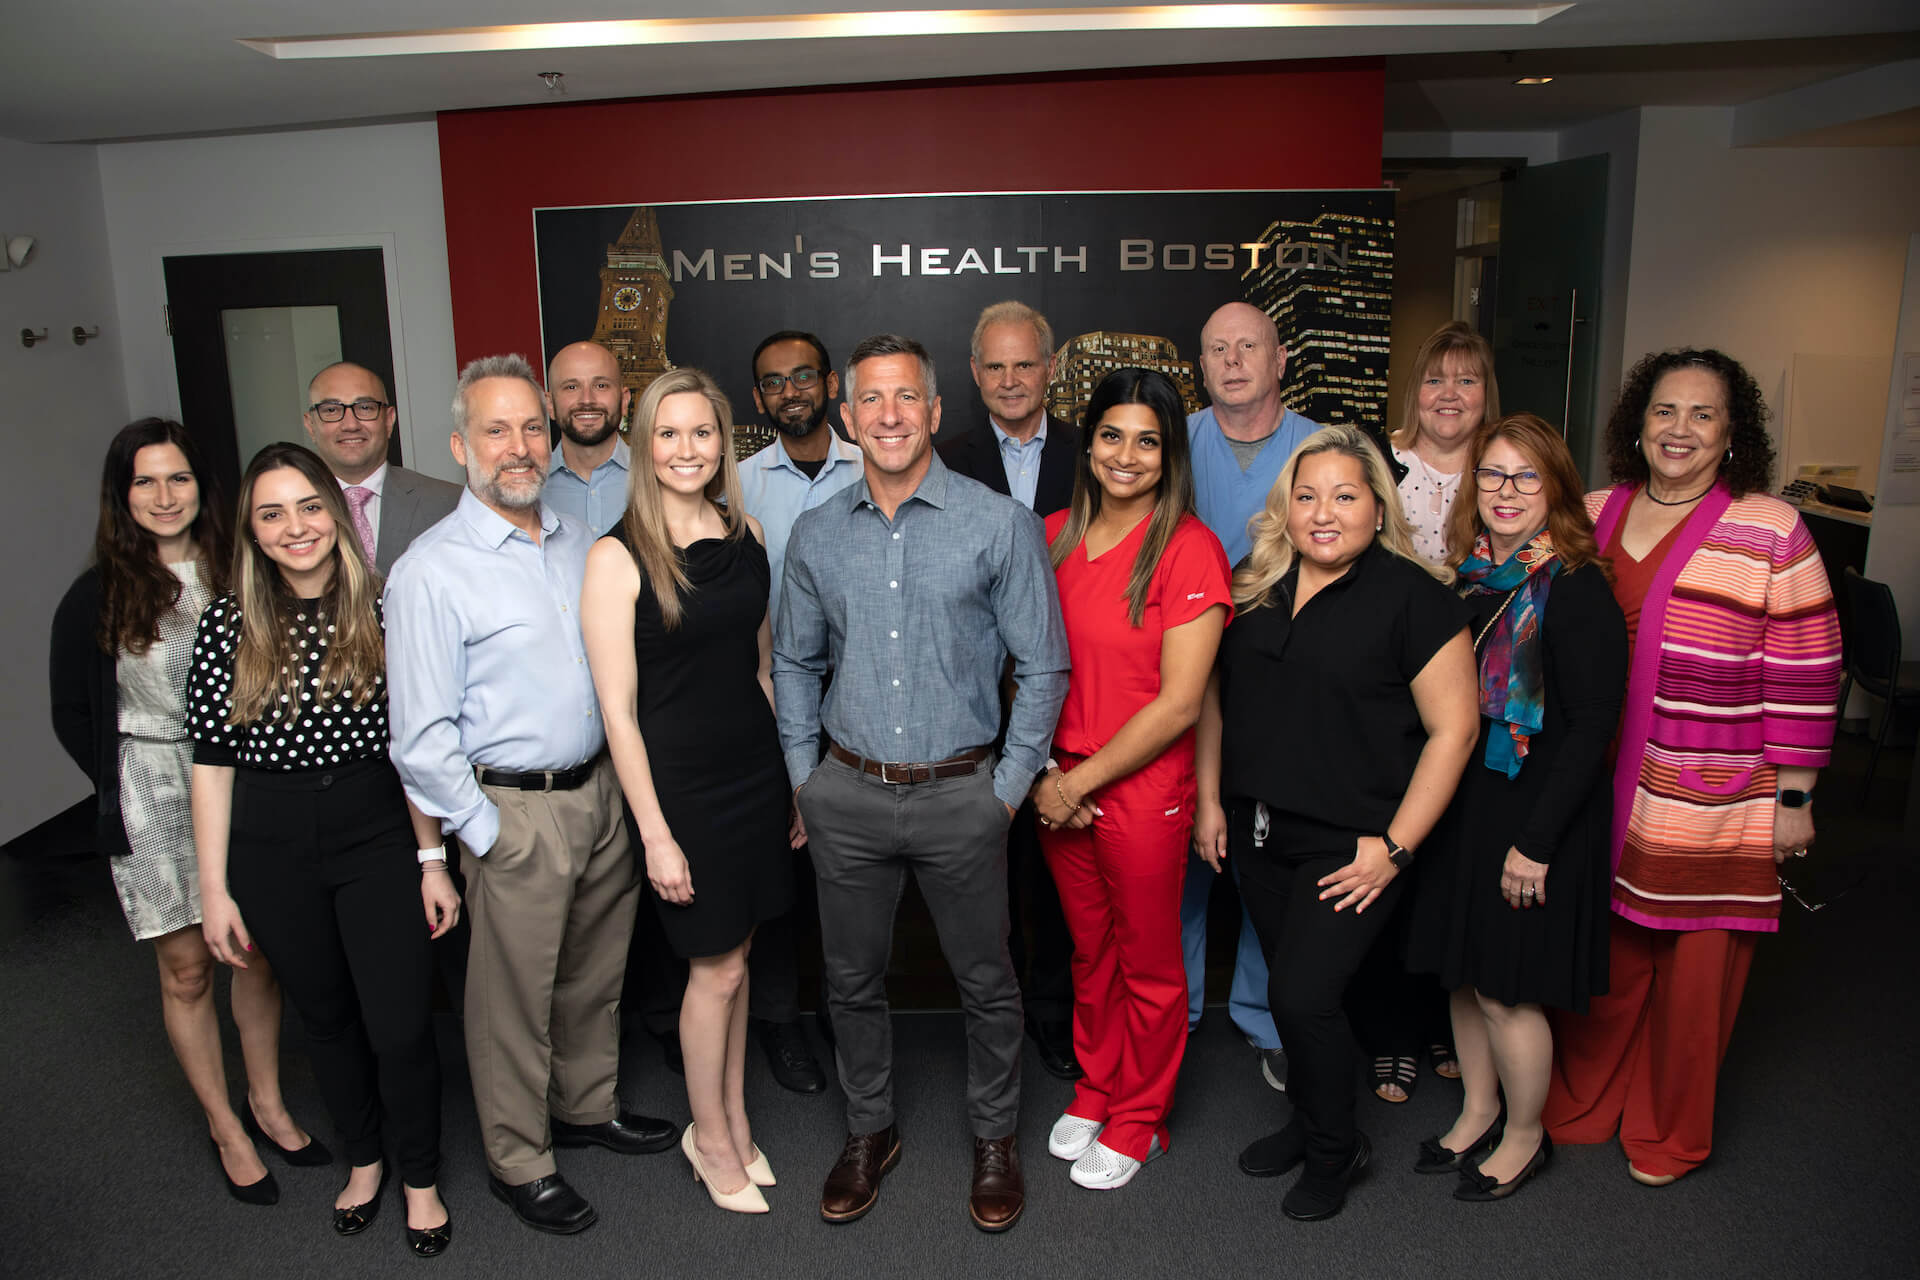 The Men's Health Boston 